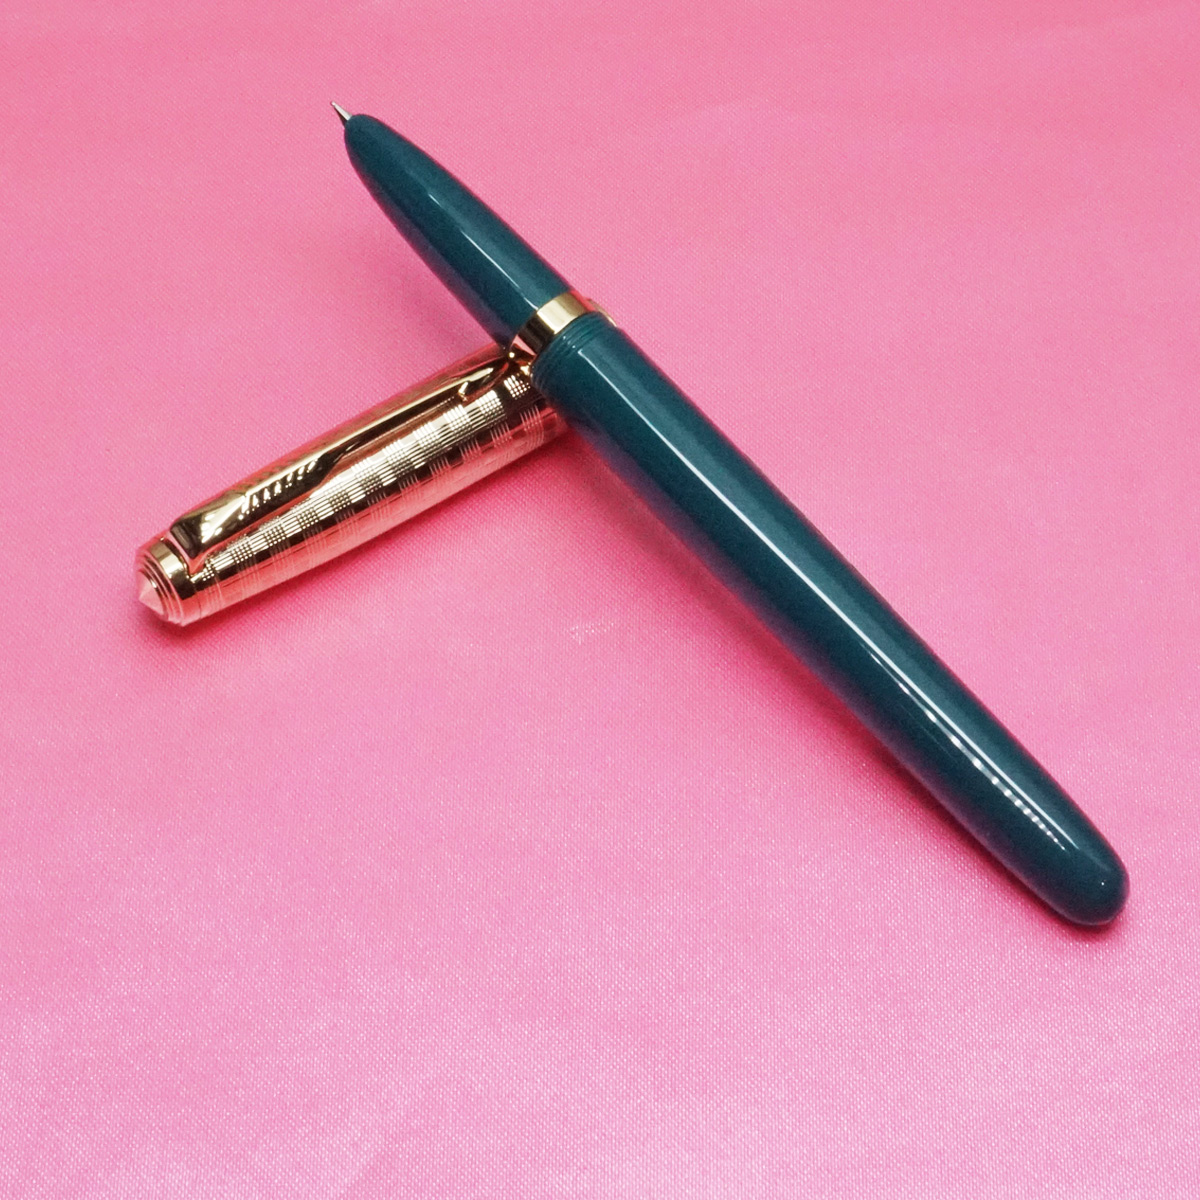 Jinhao 51  Gold Cap with Stripes and Green Body No.51 SSF Nib Eye Dropper amd Convertor type fountain Pen SKU 21986